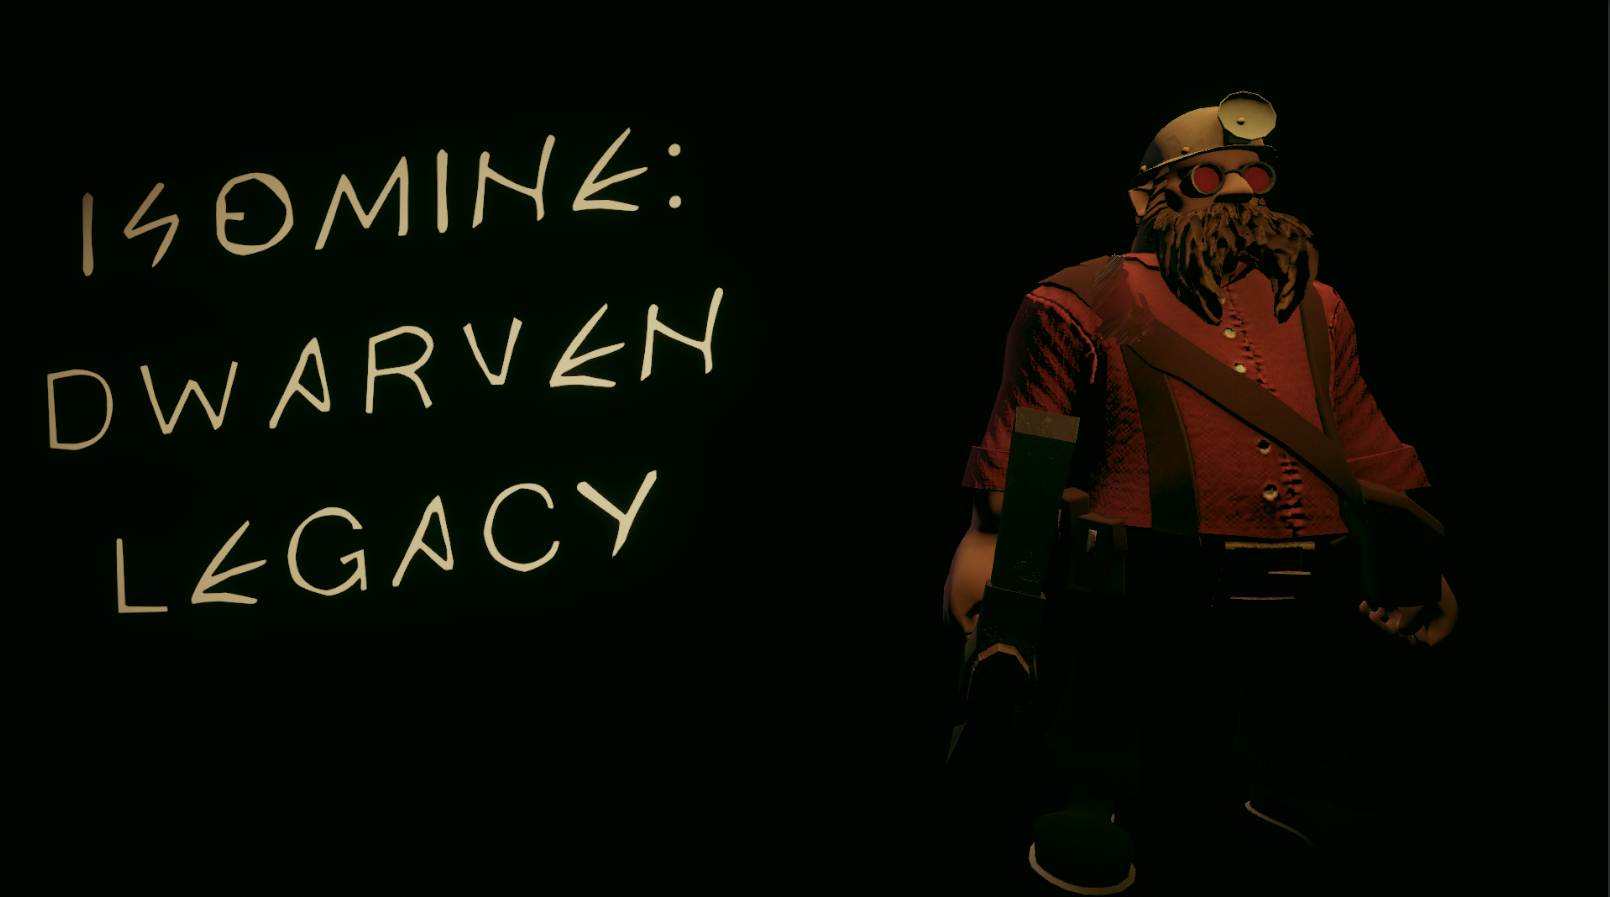 Isomine: Dwarven Legacy